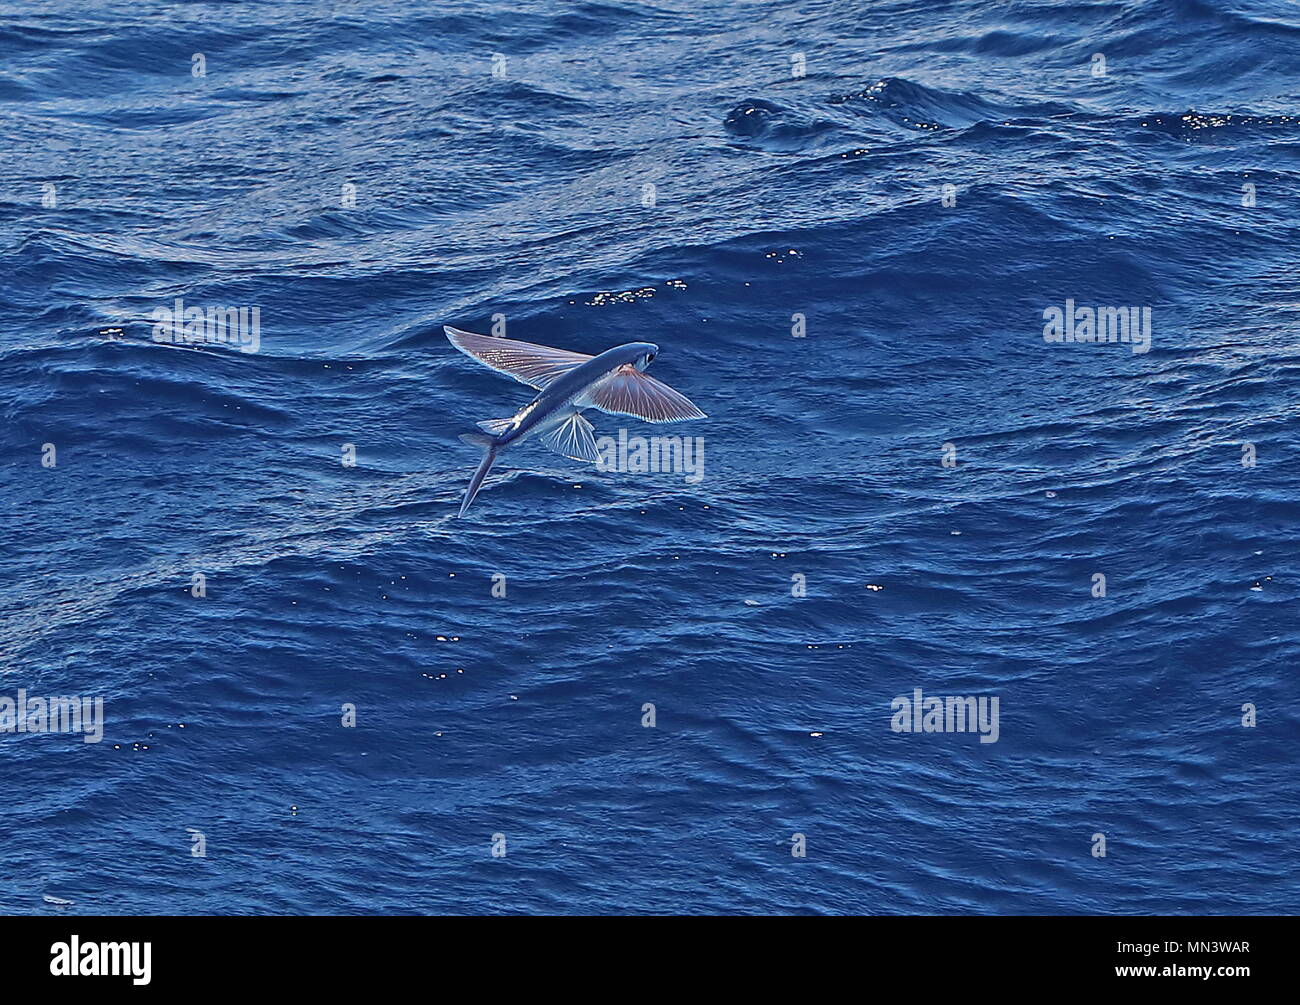 Les poissons volants survolant le Cap Vert, la mer Atlantique Est Mayex Banque D'Images